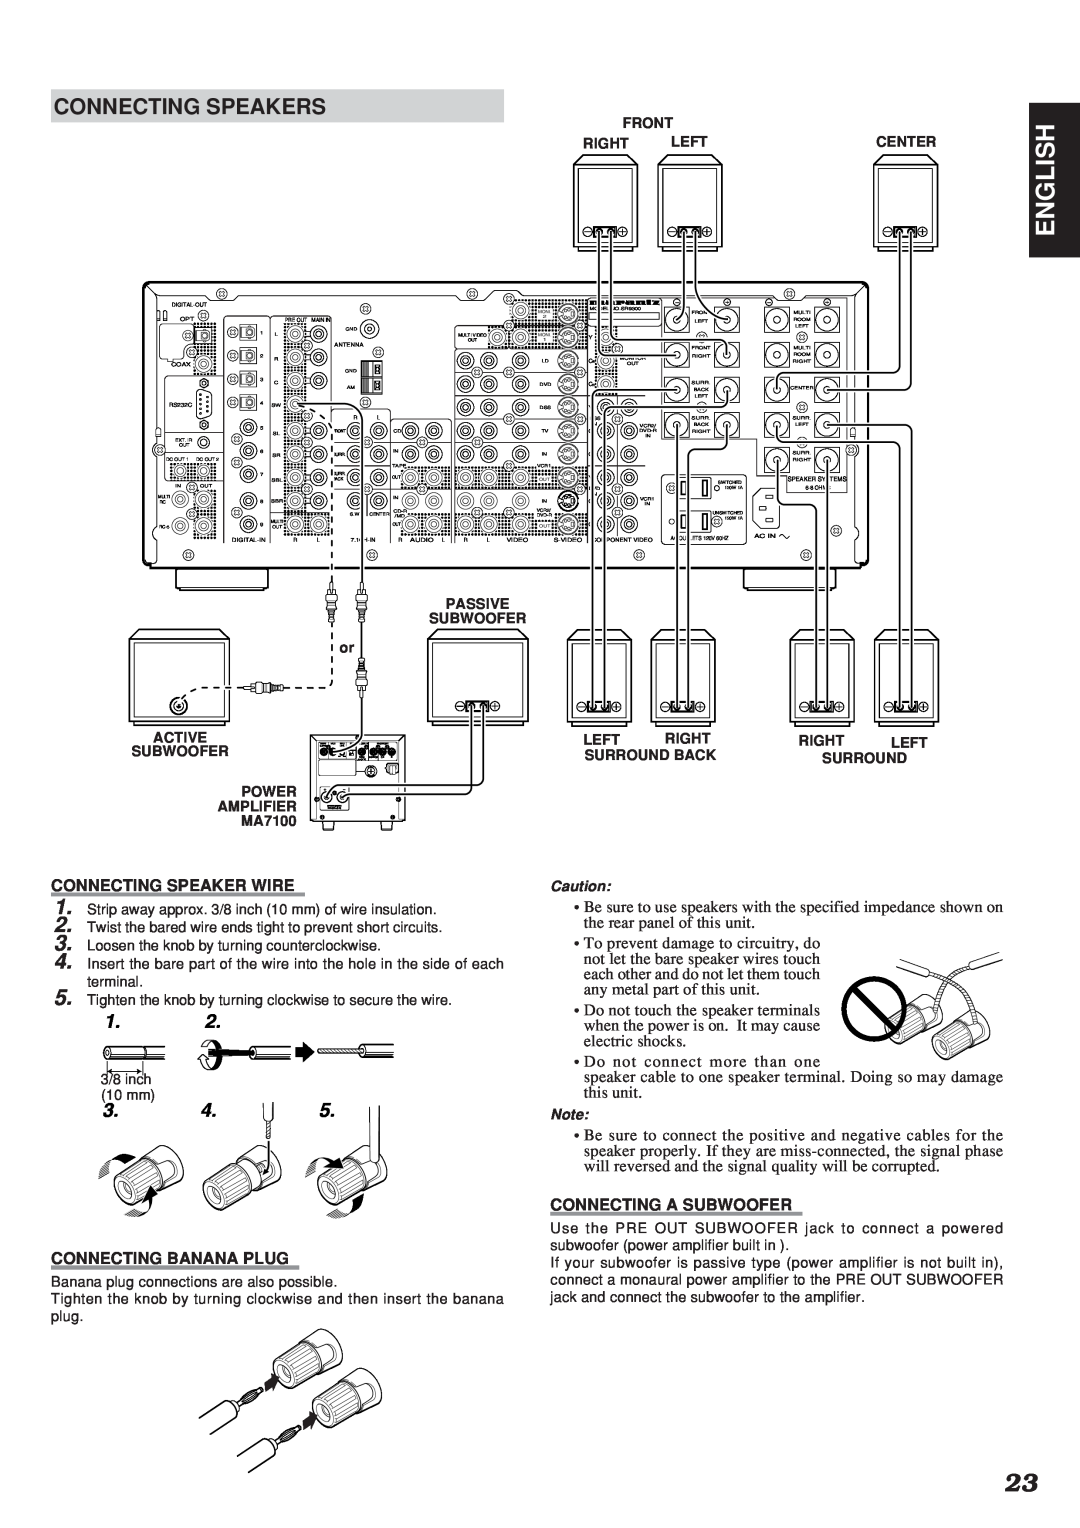 Marantz SR9300 manual English, Connecting Speakers, Connecting Speaker Wire, Connecting Banana Plug, Connecting A Subwoofer 